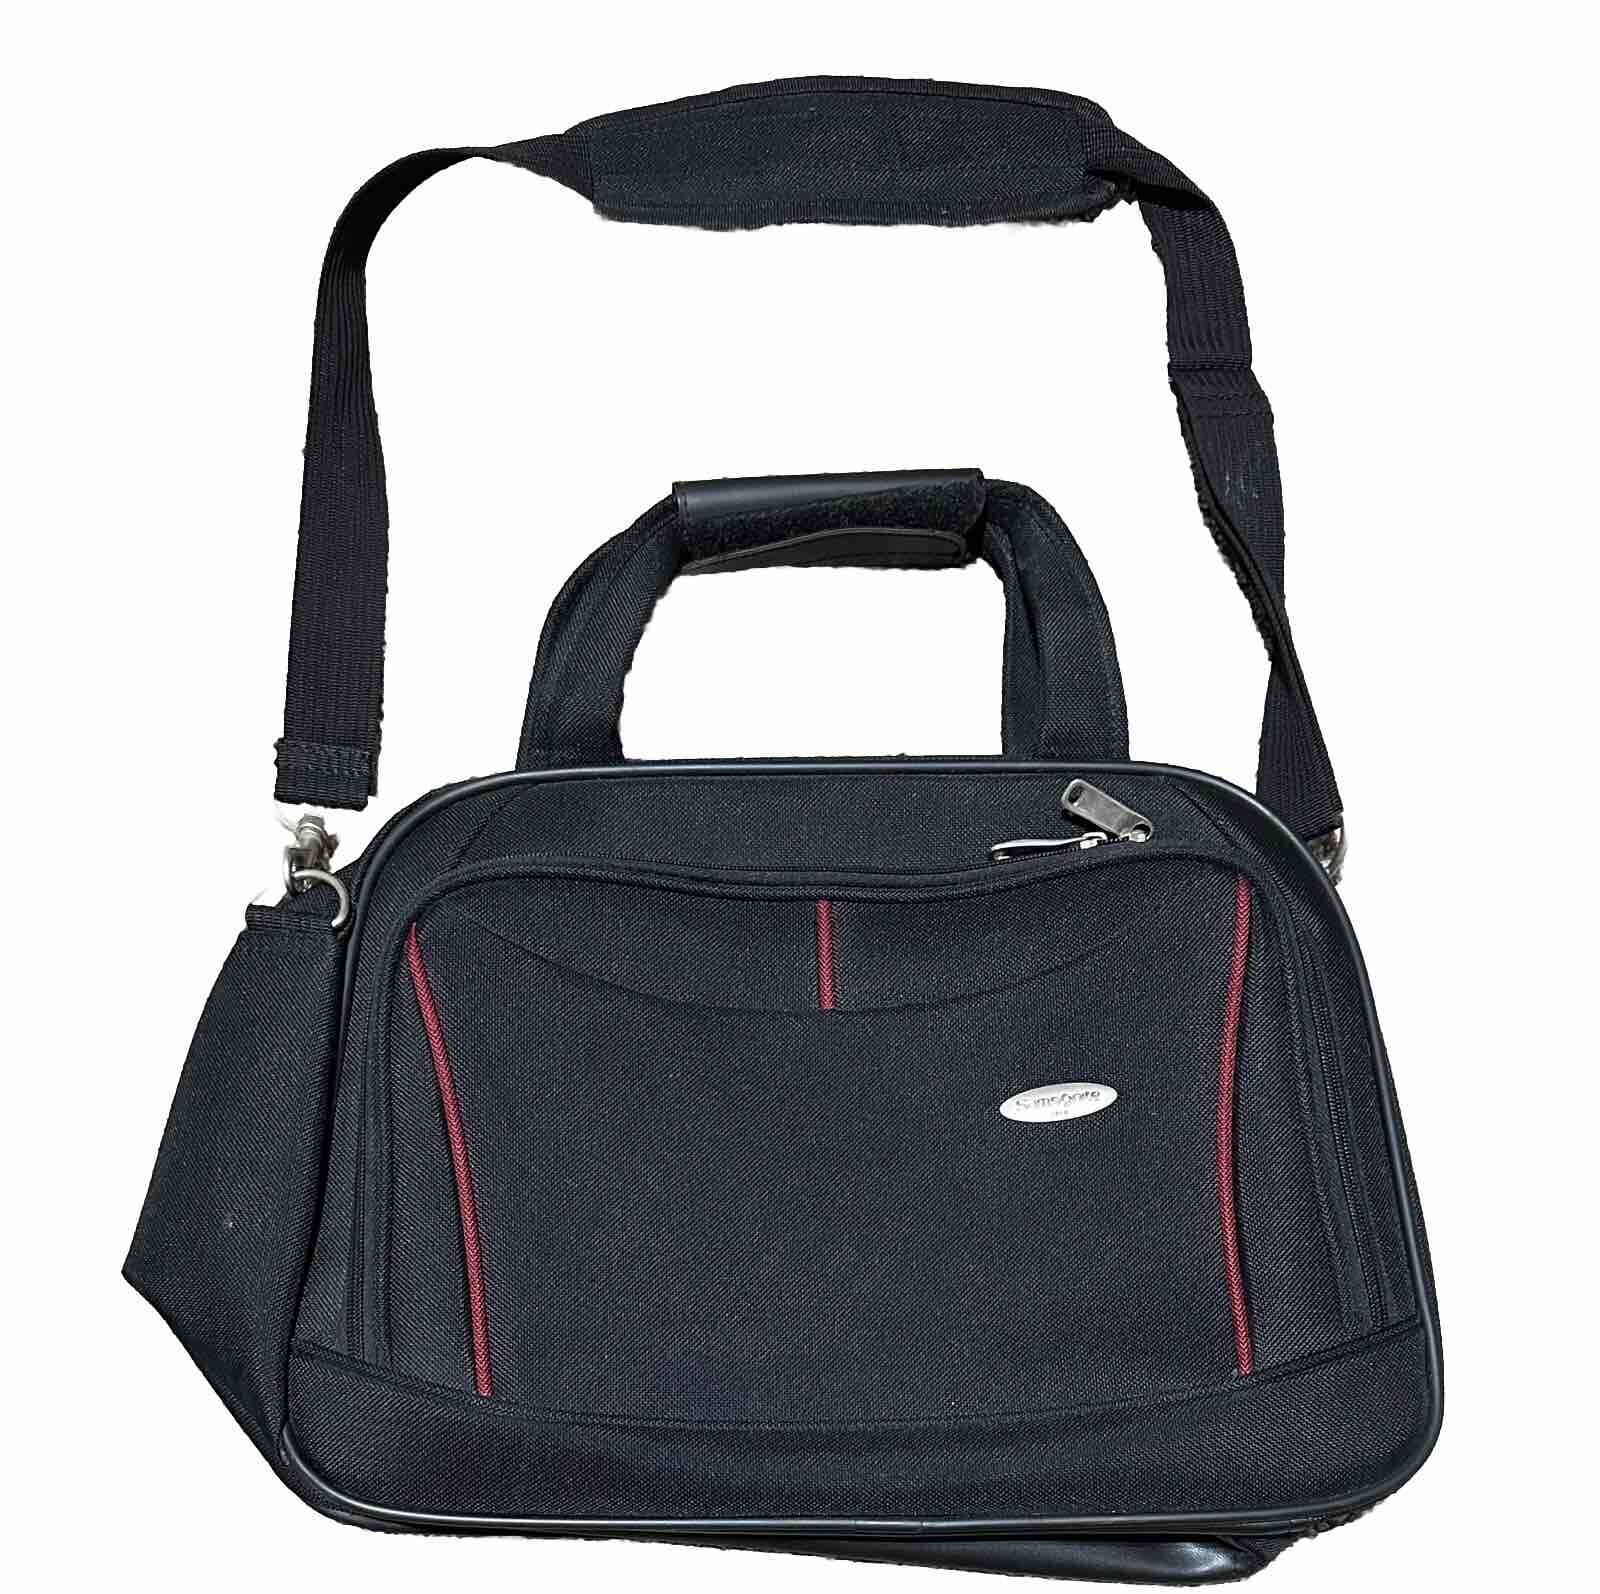 Samsonite Laptop Messenger Bag Carry On Black Red 16x12x5 Briefcase 